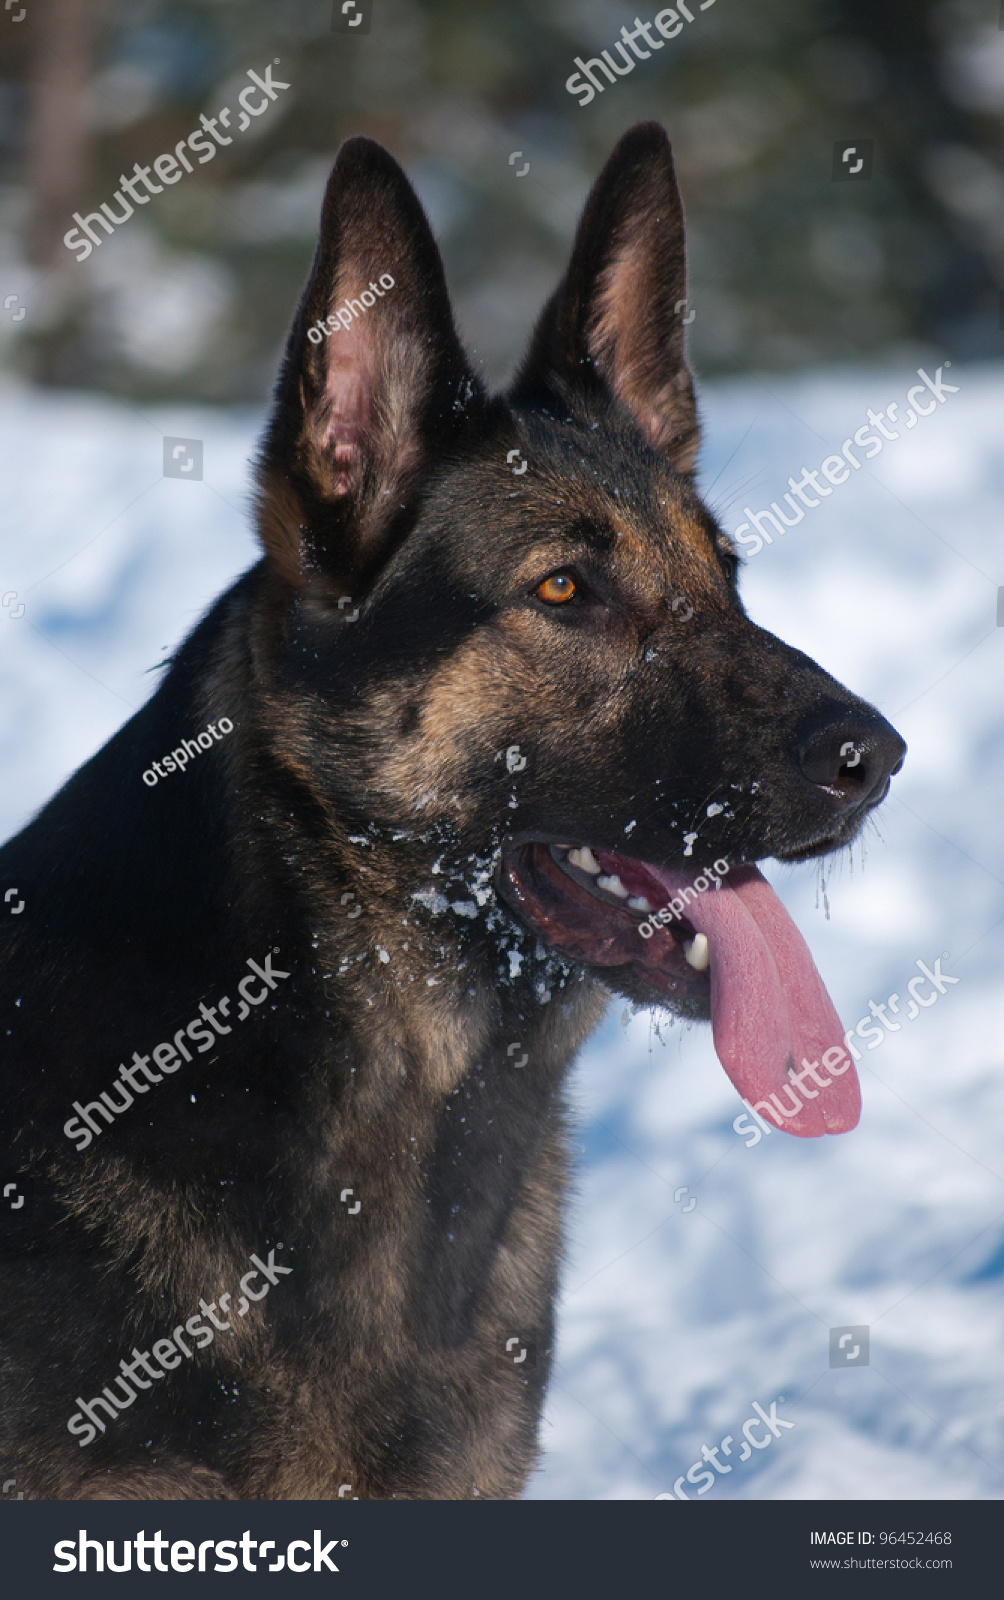 Work Group German Shepherd Dog Portrait Stock Photo 96452468 : Shutterstock